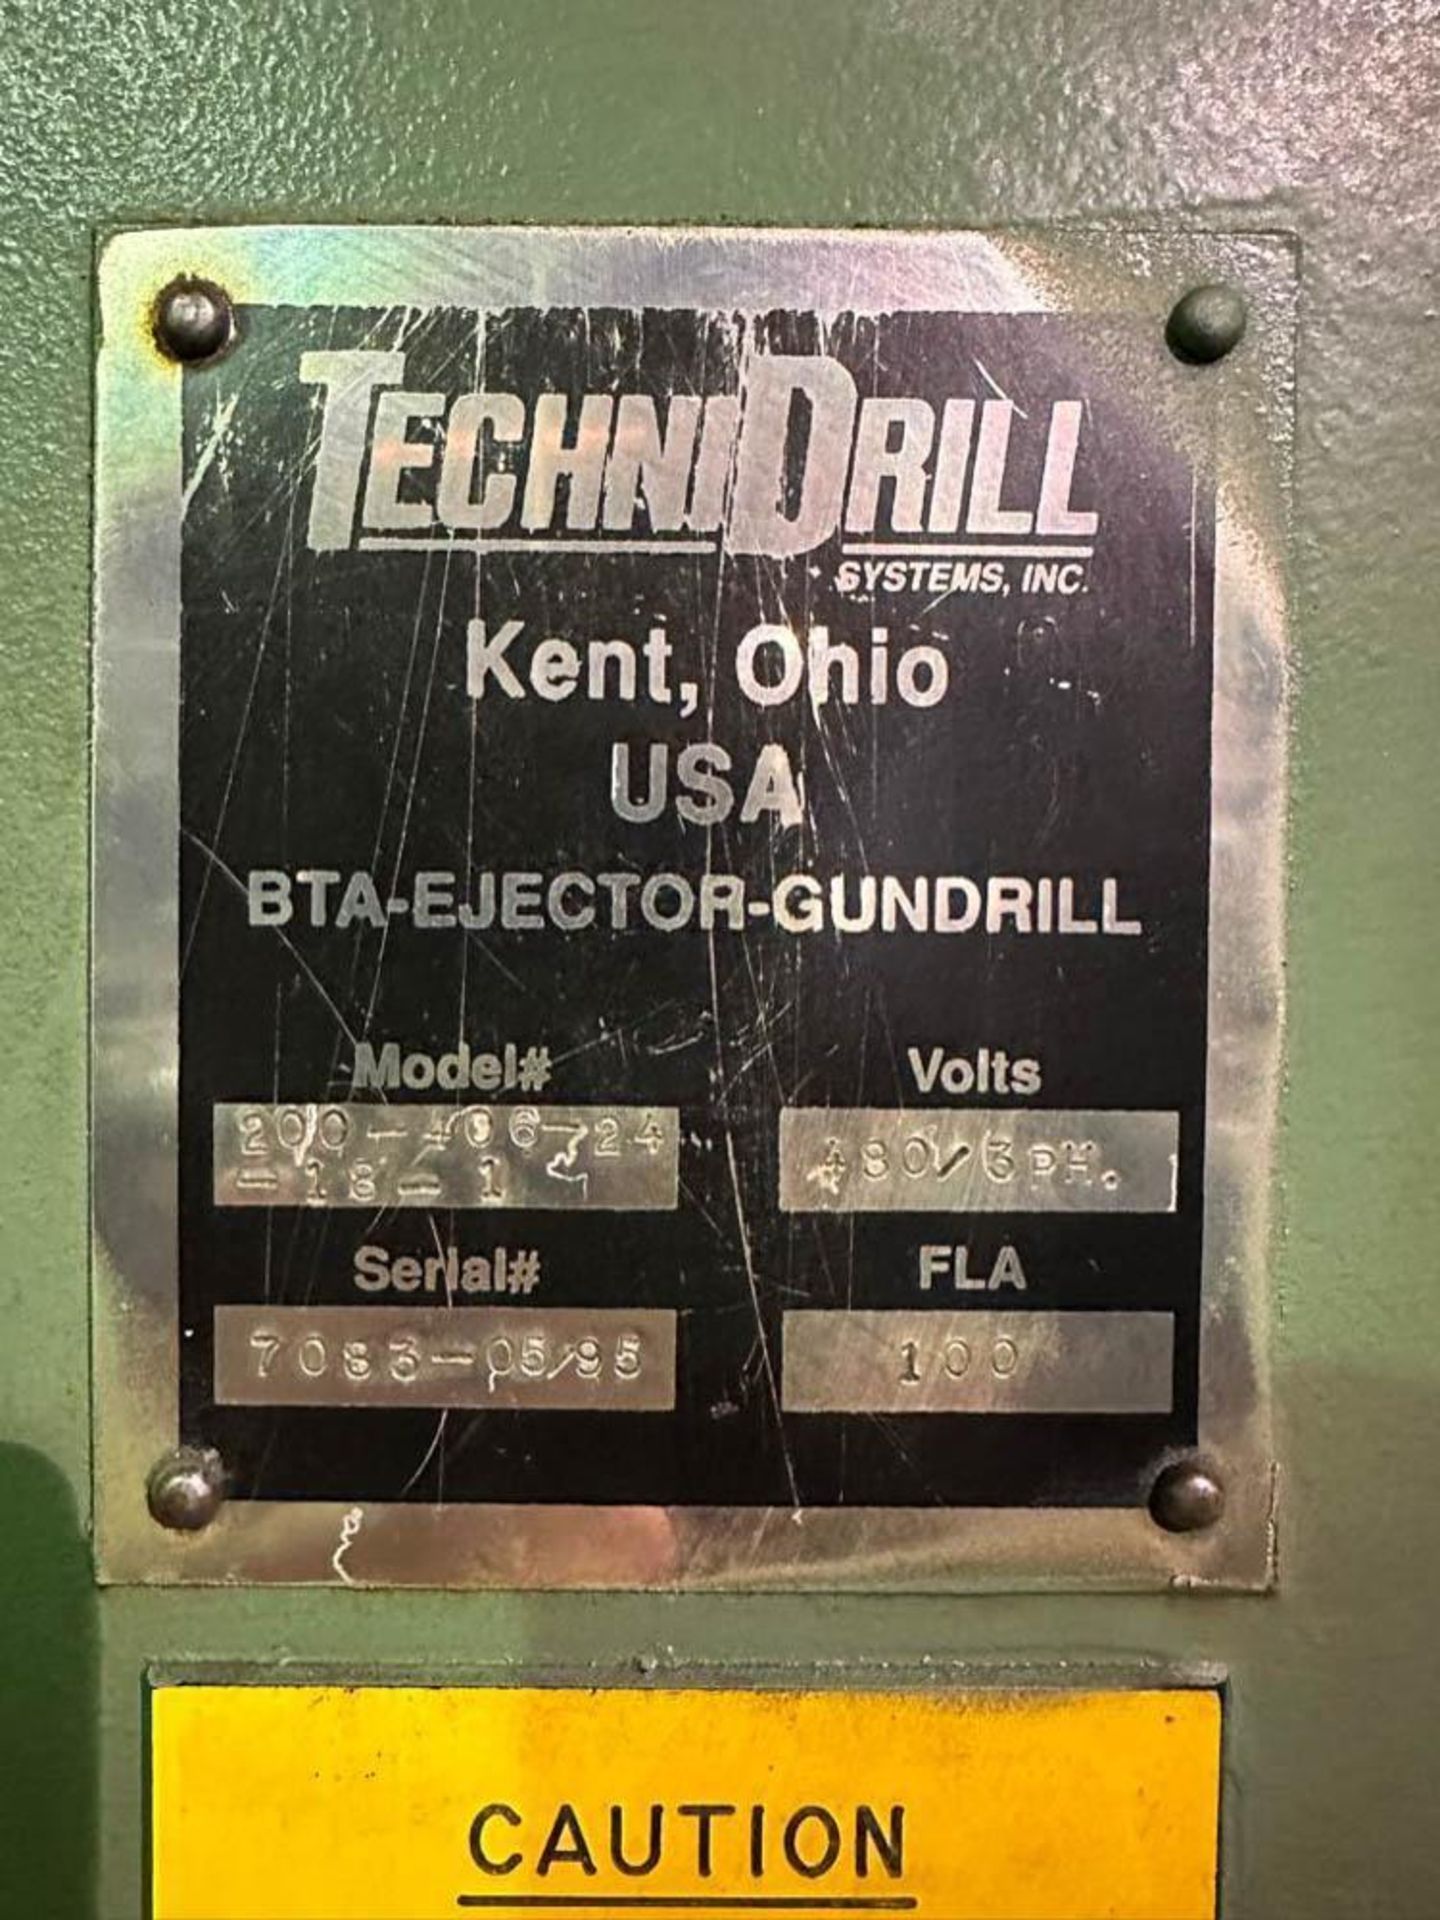 TechniDrill Column CNC Gun Drill-Machine Hub, Model: 200-406-24-18-1, S/N: 7083-05/95 with Turbo - Image 5 of 6